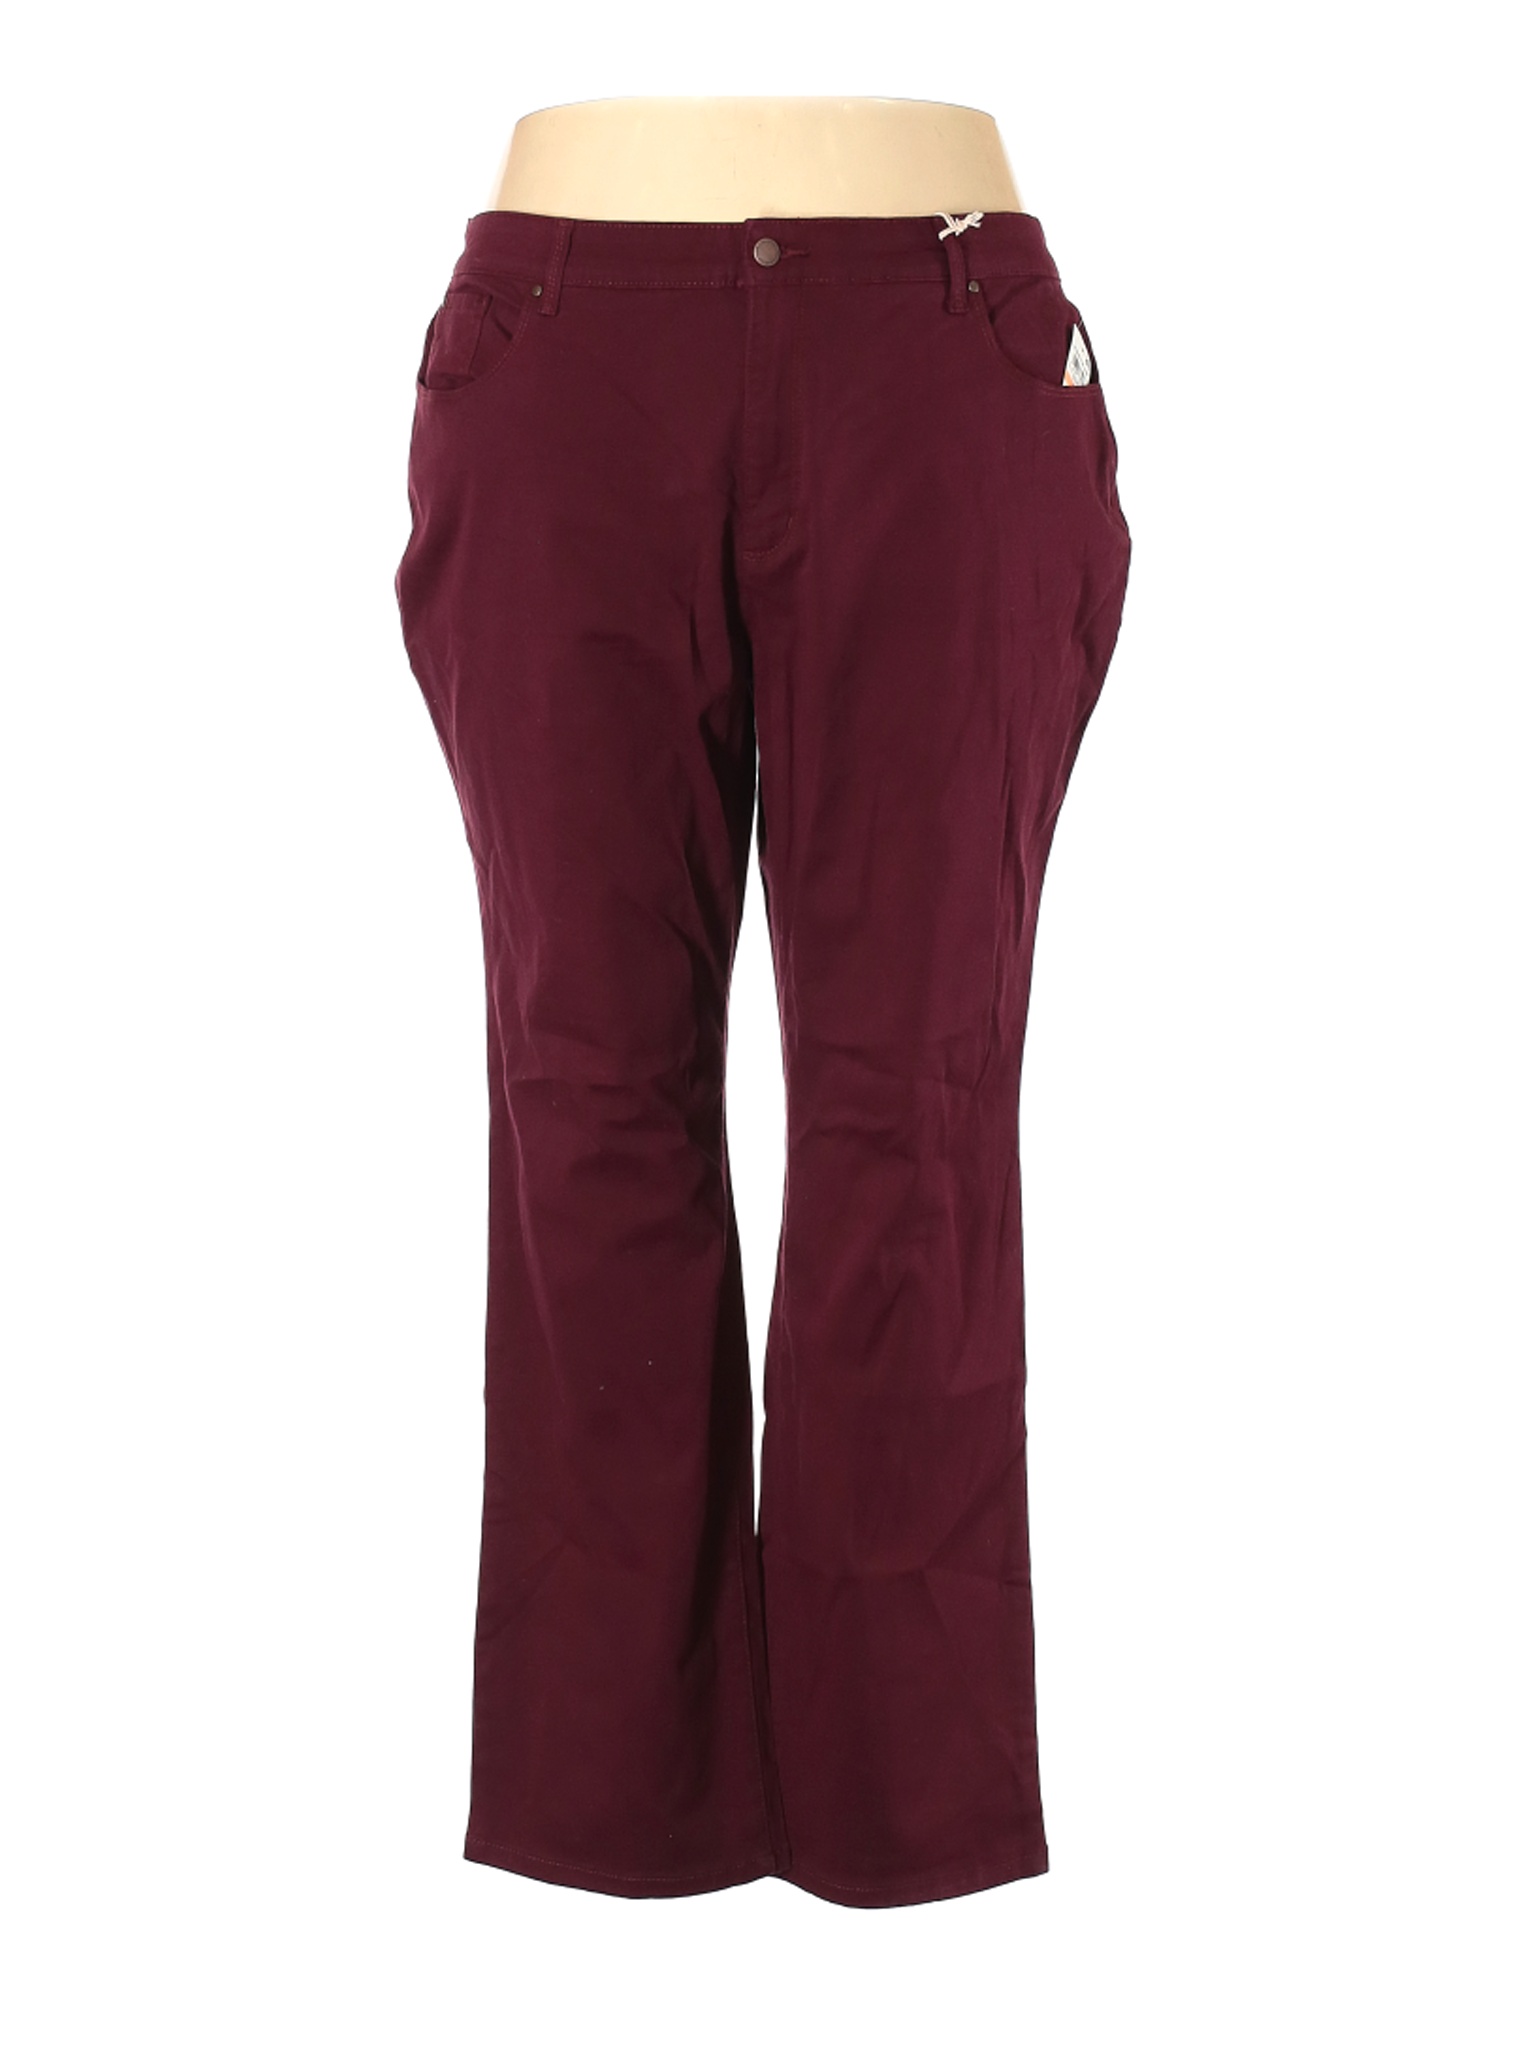 NWT Charter Club Women Red Casual Pants 24 Plus | eBay